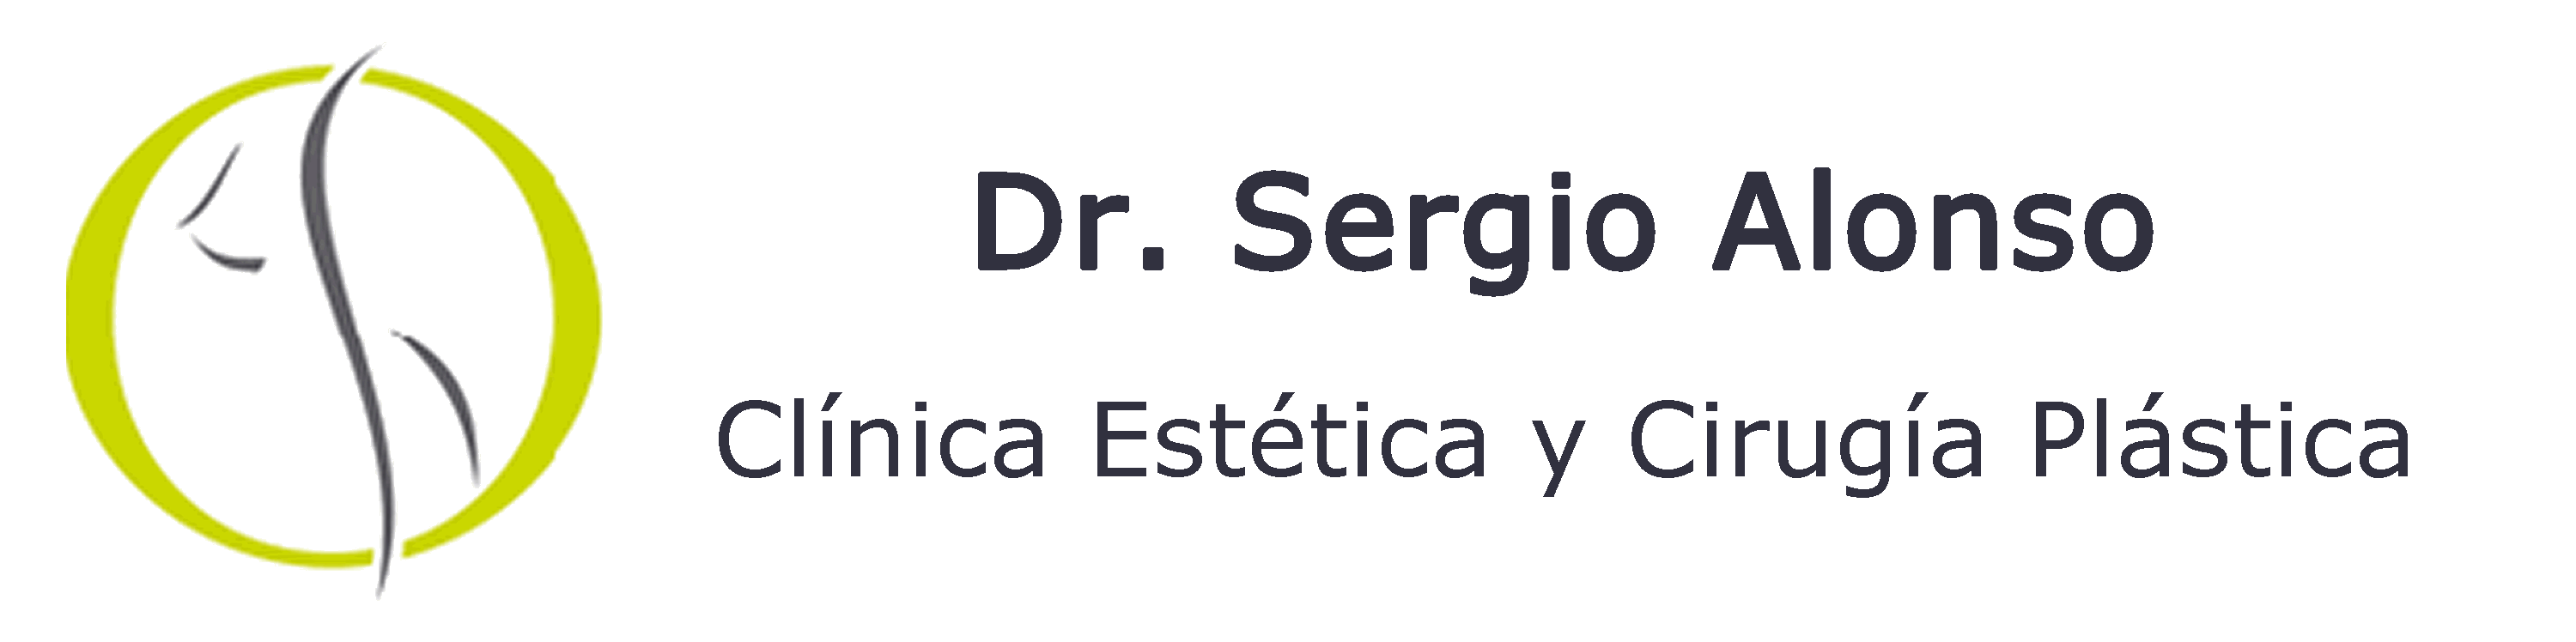 Dr. Sergio Alonso